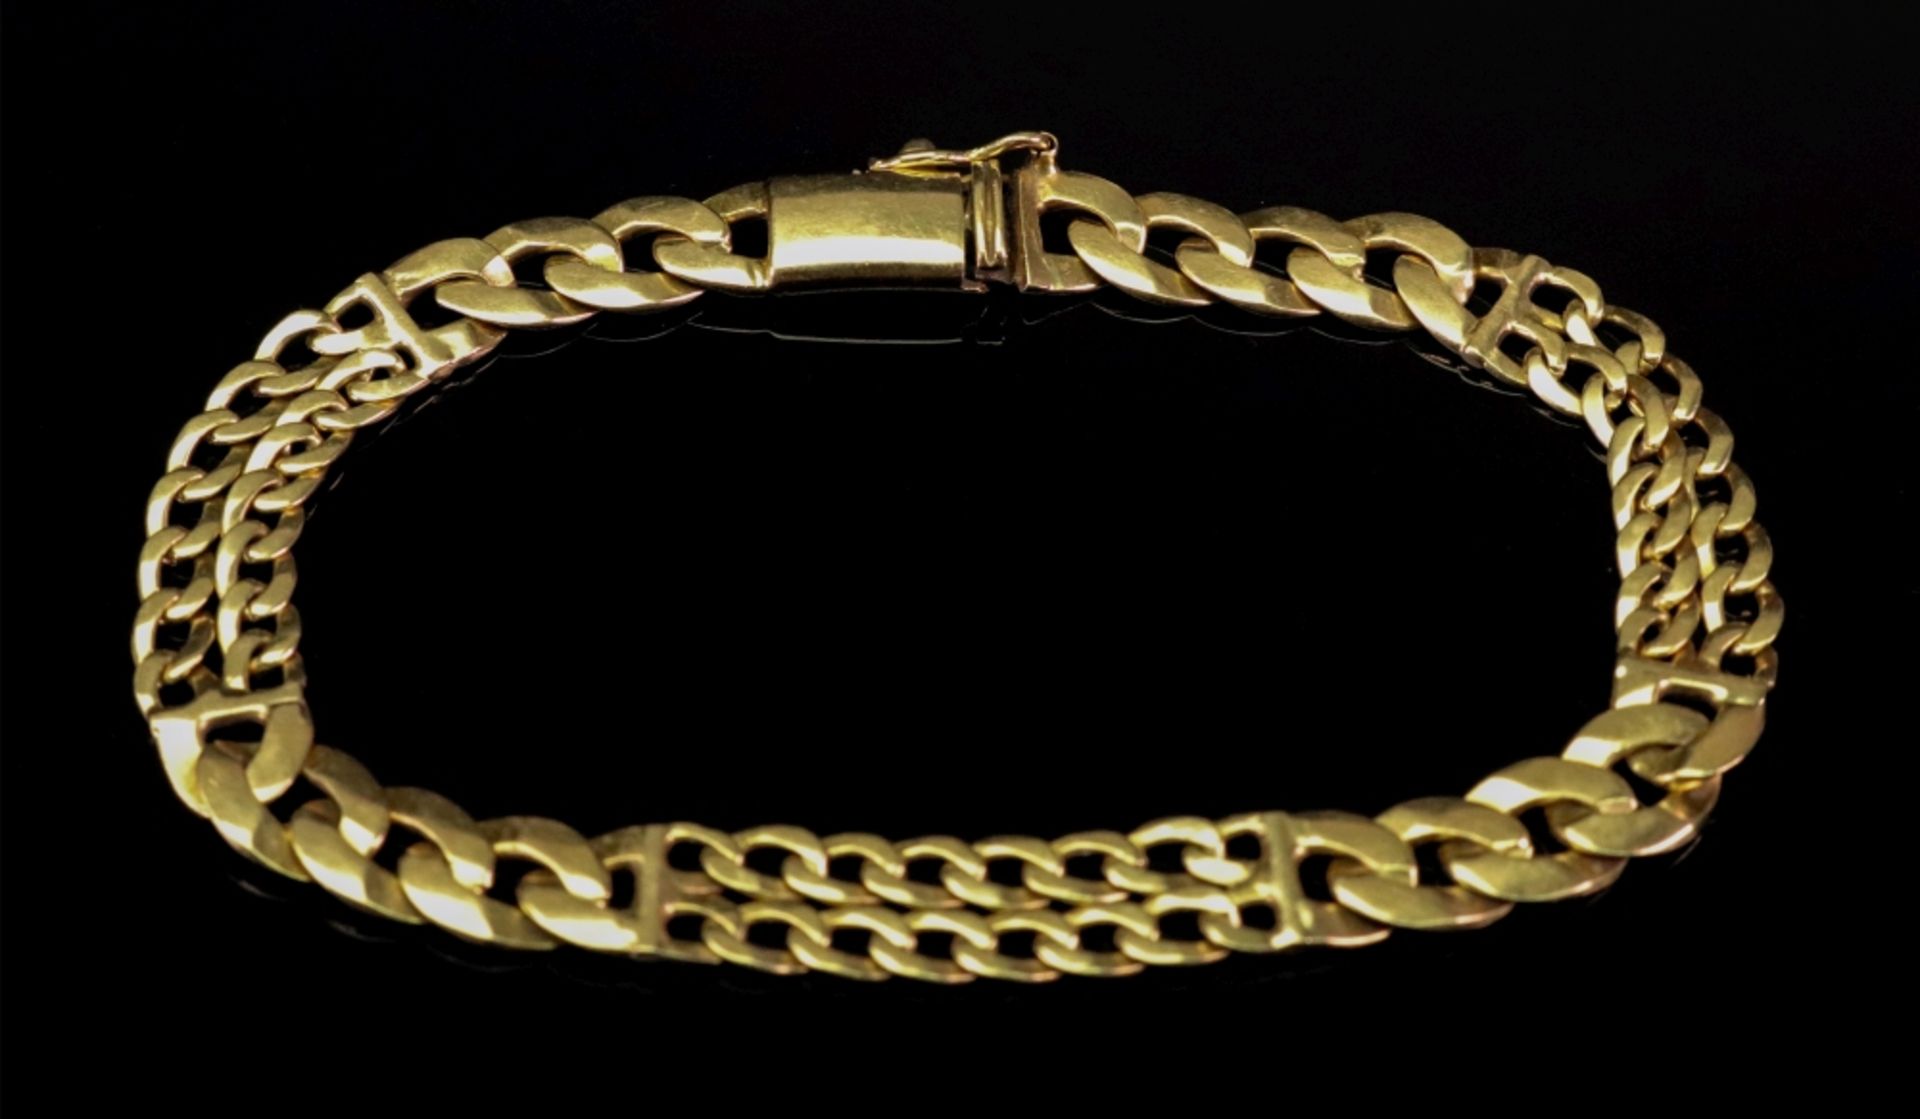 An 18ct gold bracelet, detailed 750, 15.2g.